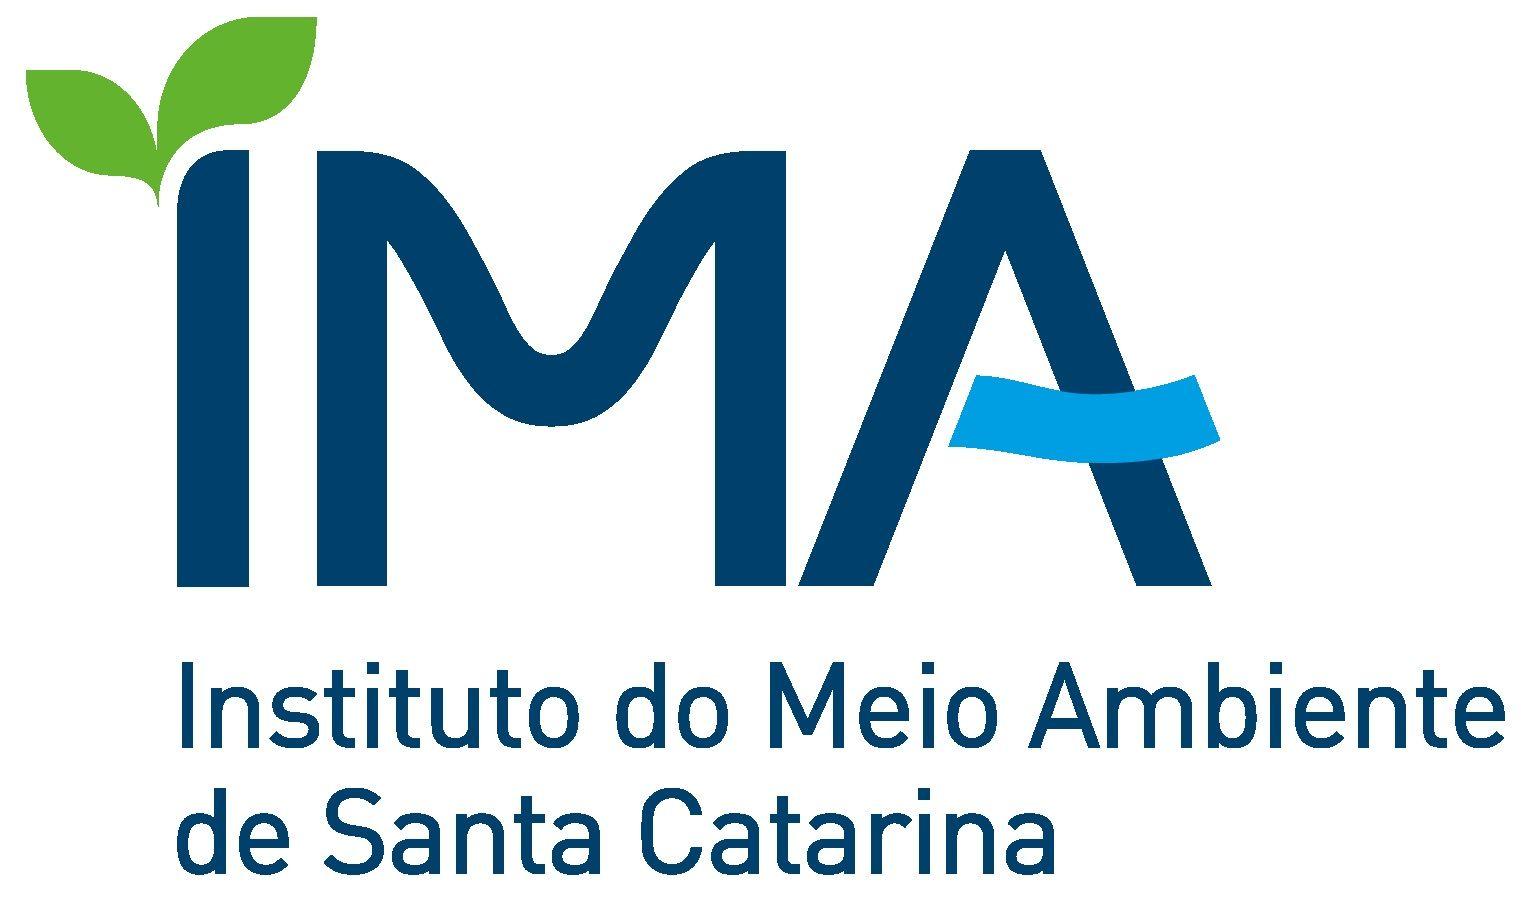 Ima Logo - logo IMA - CIMVI - Consórcio Intermunicipal do Médio Vale do Itajaí